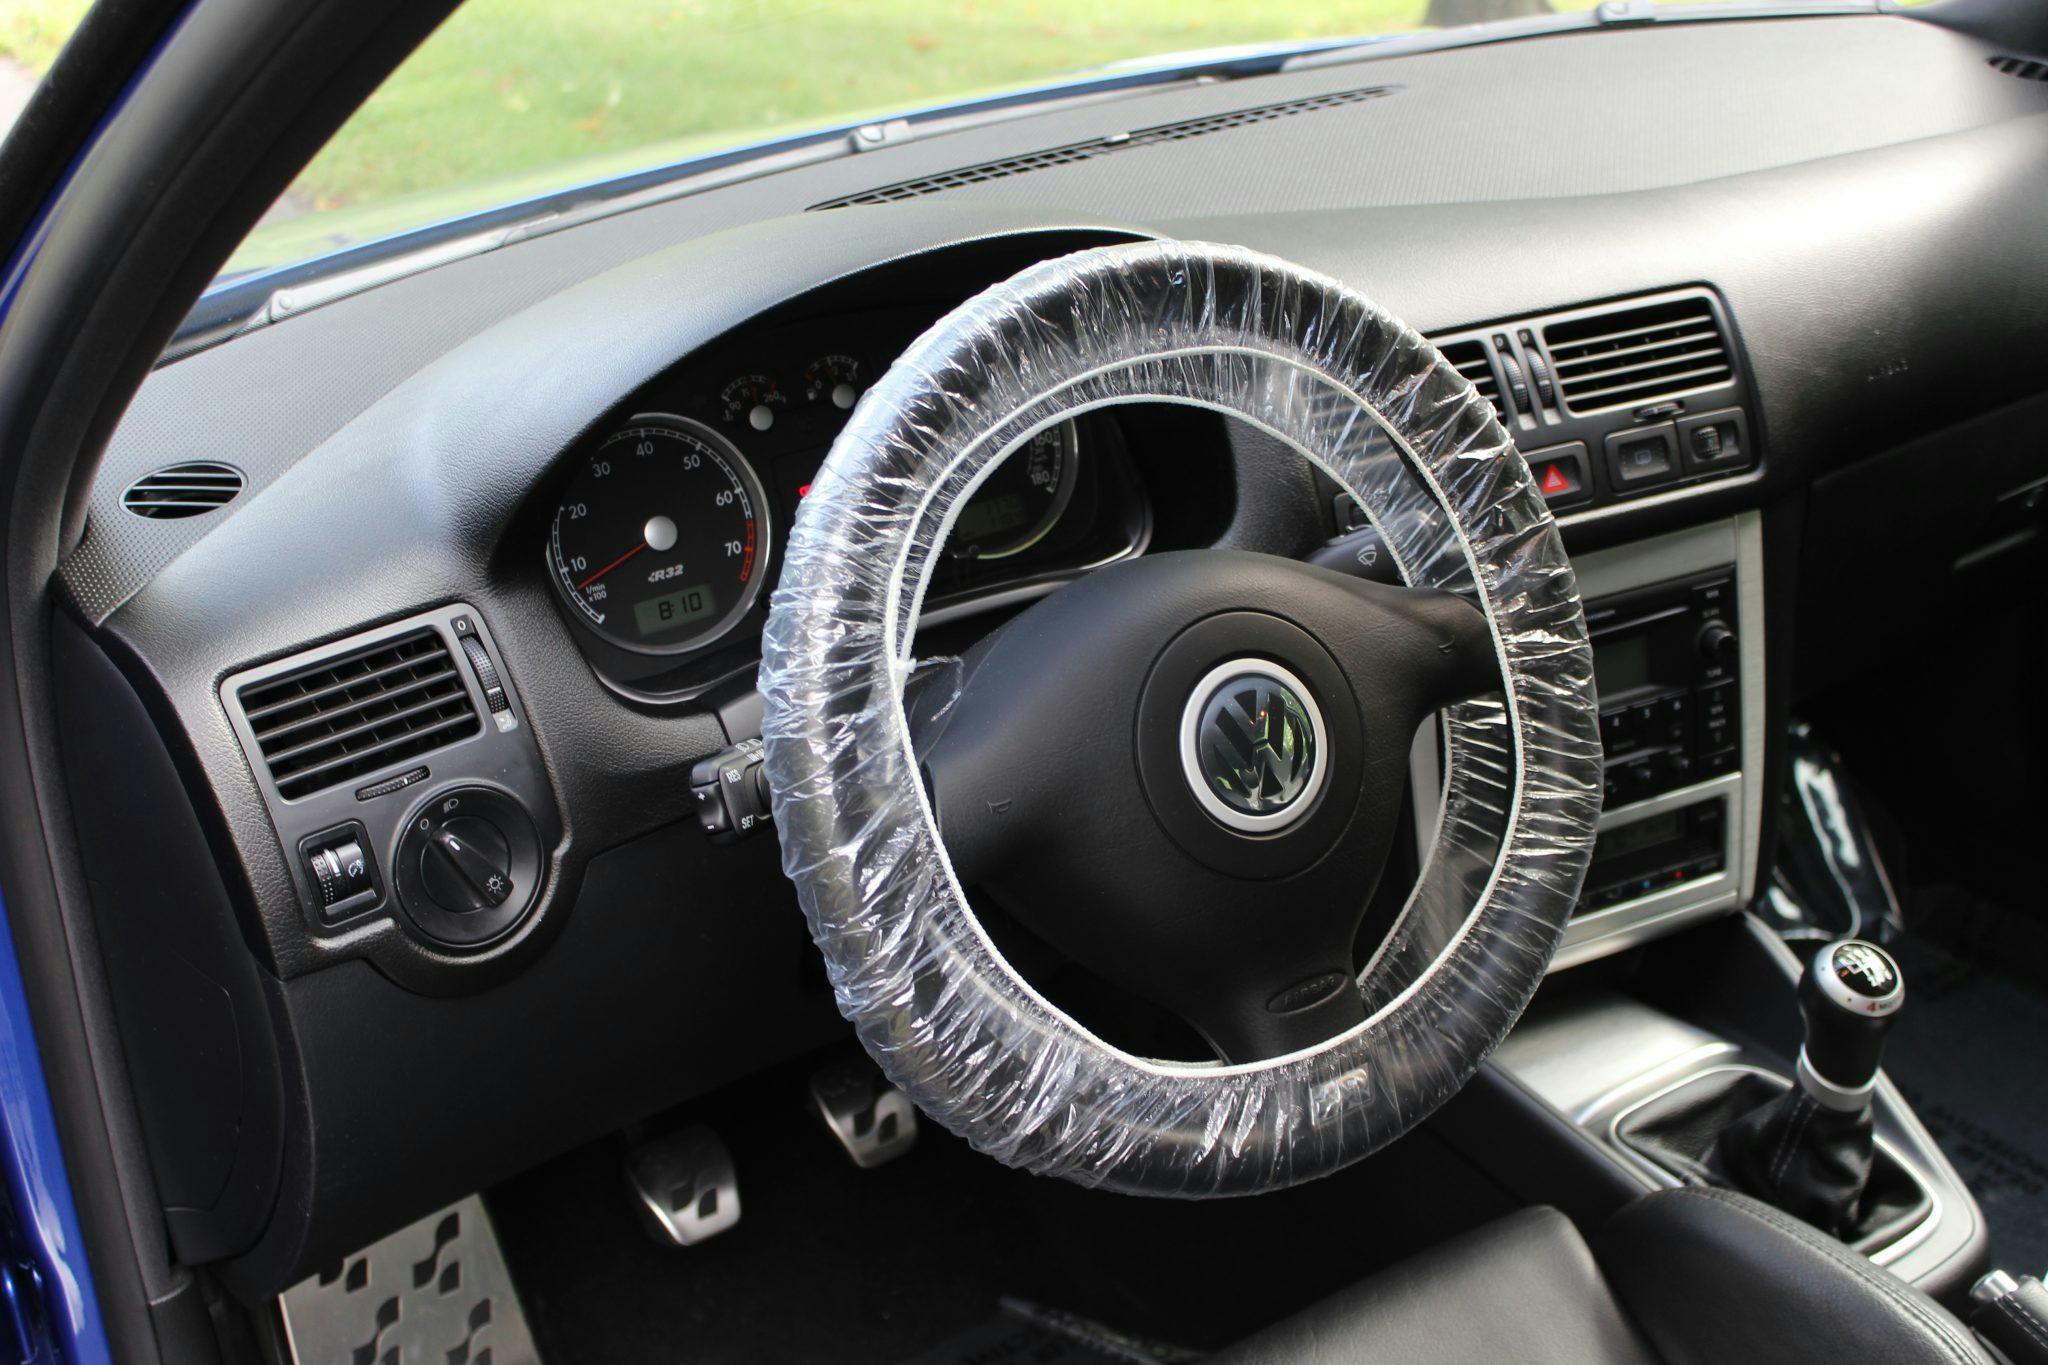 VW R32 interior